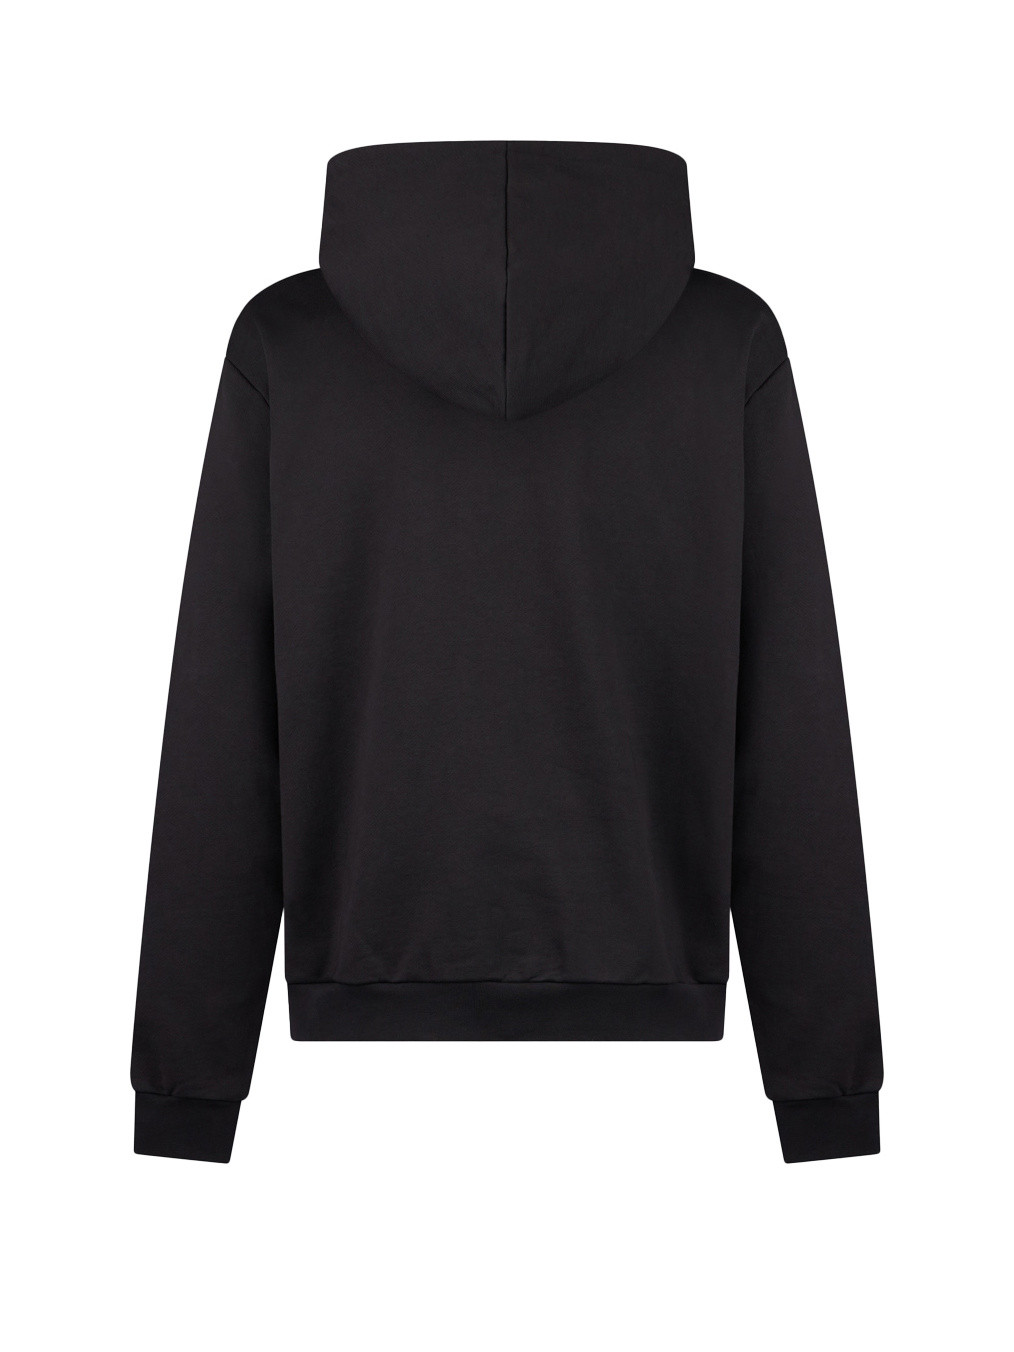 Phobia - Cotton sweatshirt with lightning print, Black, large image number 3